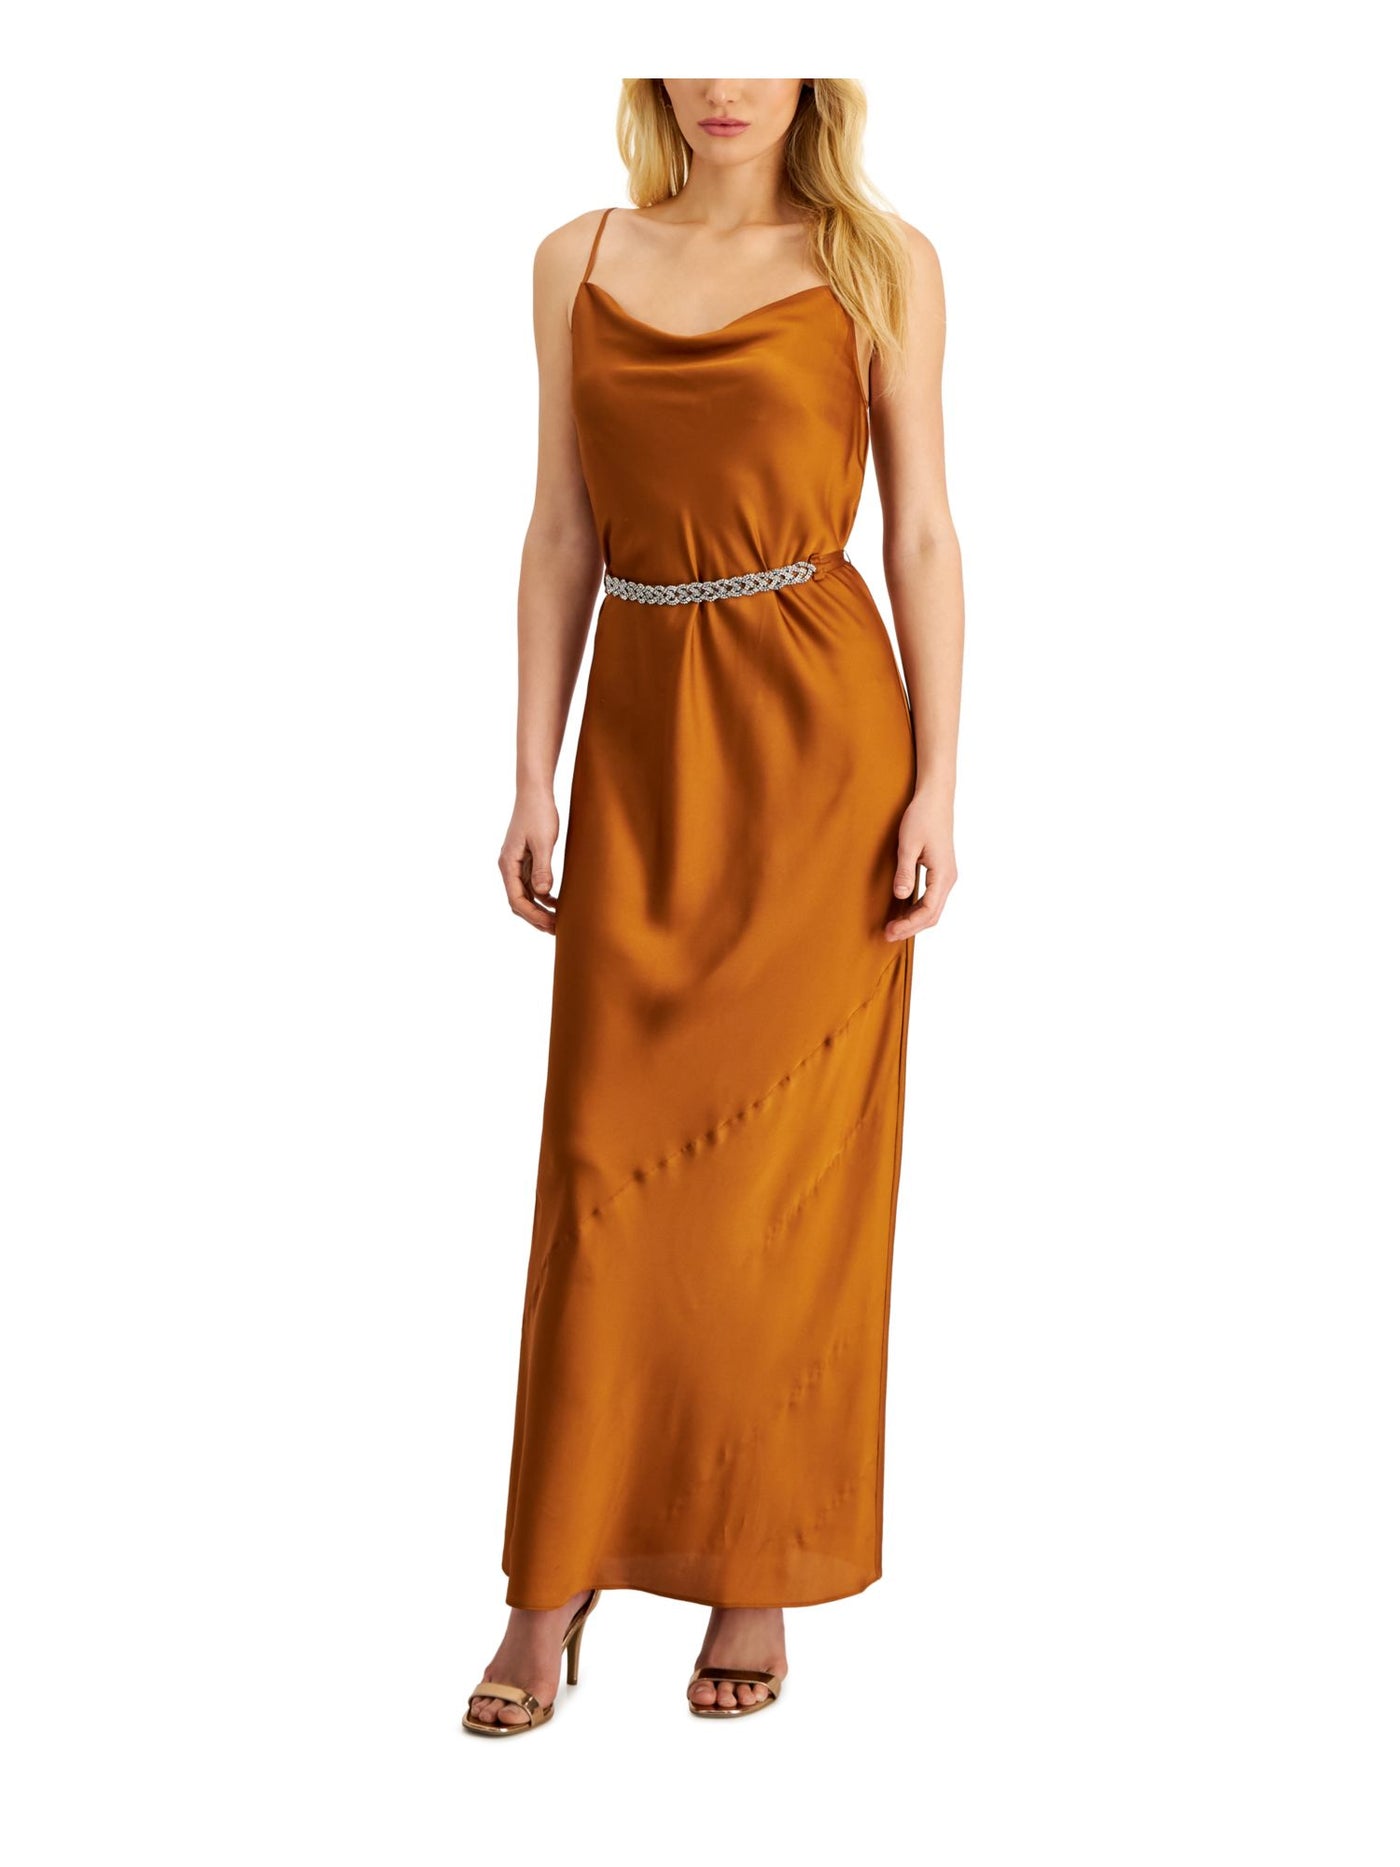 DONNA KARAN Womens Orange Unlined Spaghetti Strap Cowl Neck Full-Length Evening Dress 14